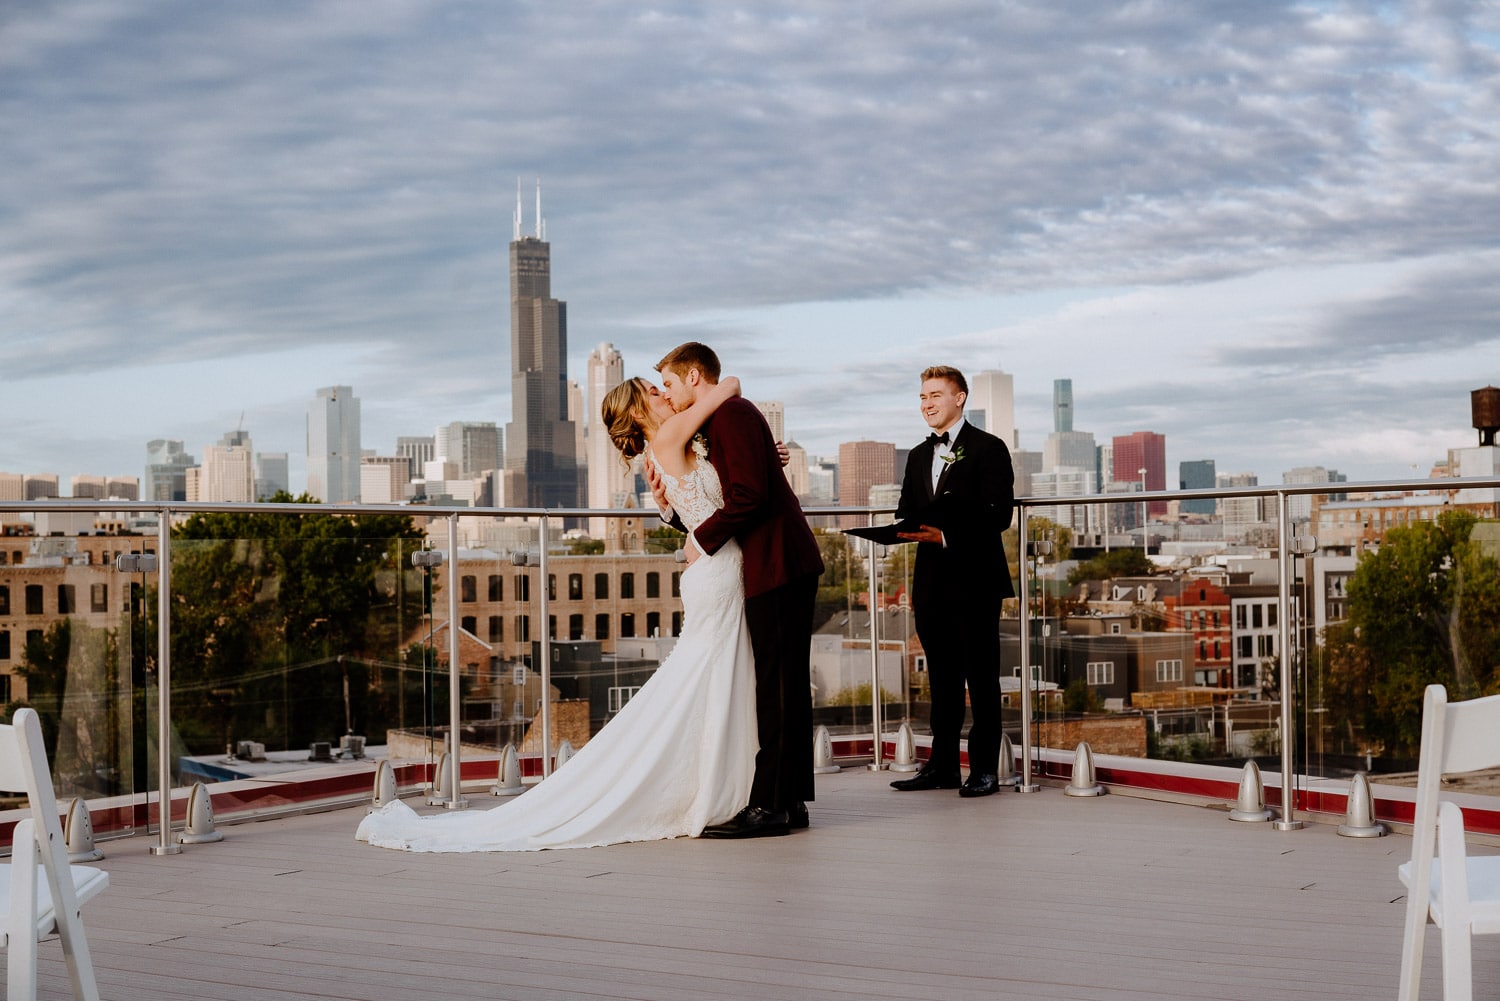 The Best Industrial Wedding Venues In Chicago Kevin Kienitz